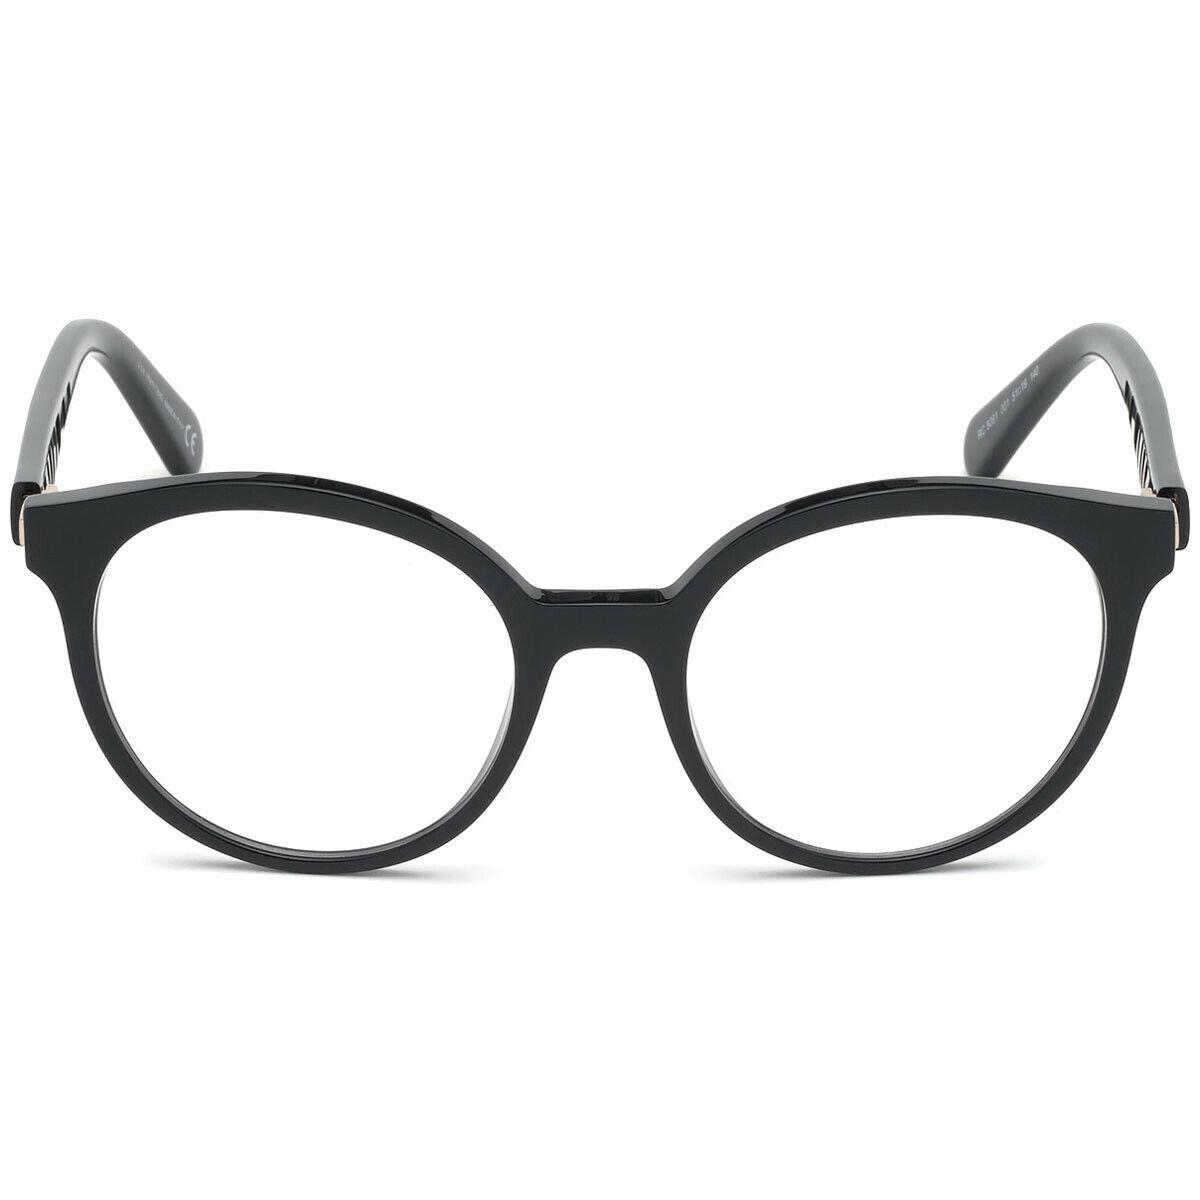 Roberto Cavalli RC 5091 Black 001 Round Plastic Eyeglasses Frame 51-19-140 Italy